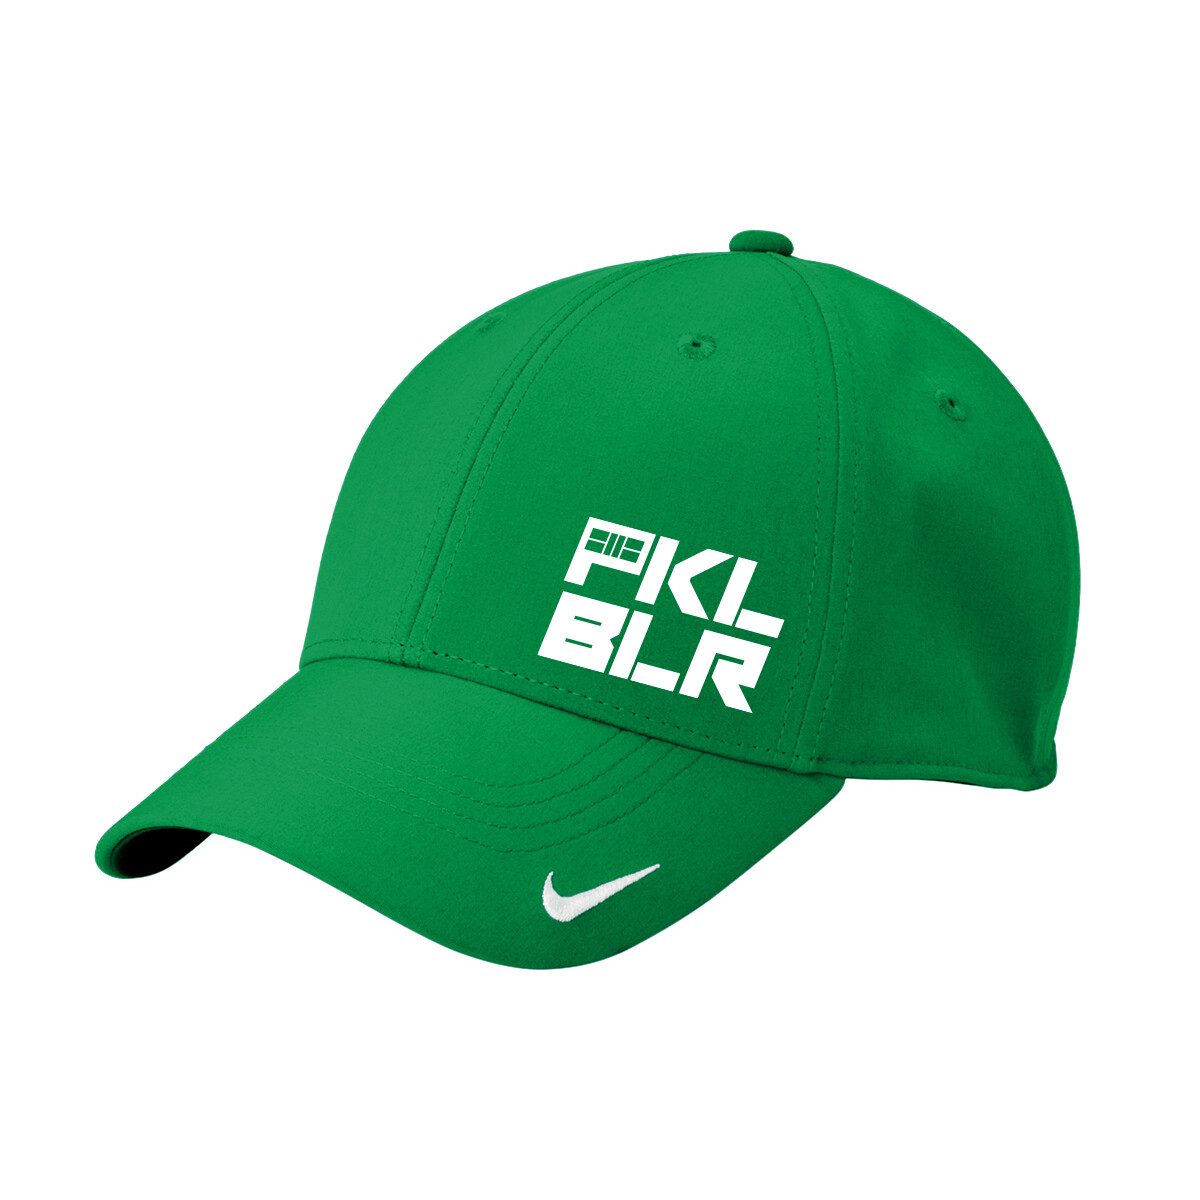 Nike Standard Golf-Dri-FIT Swoosh Perforated Cap, White